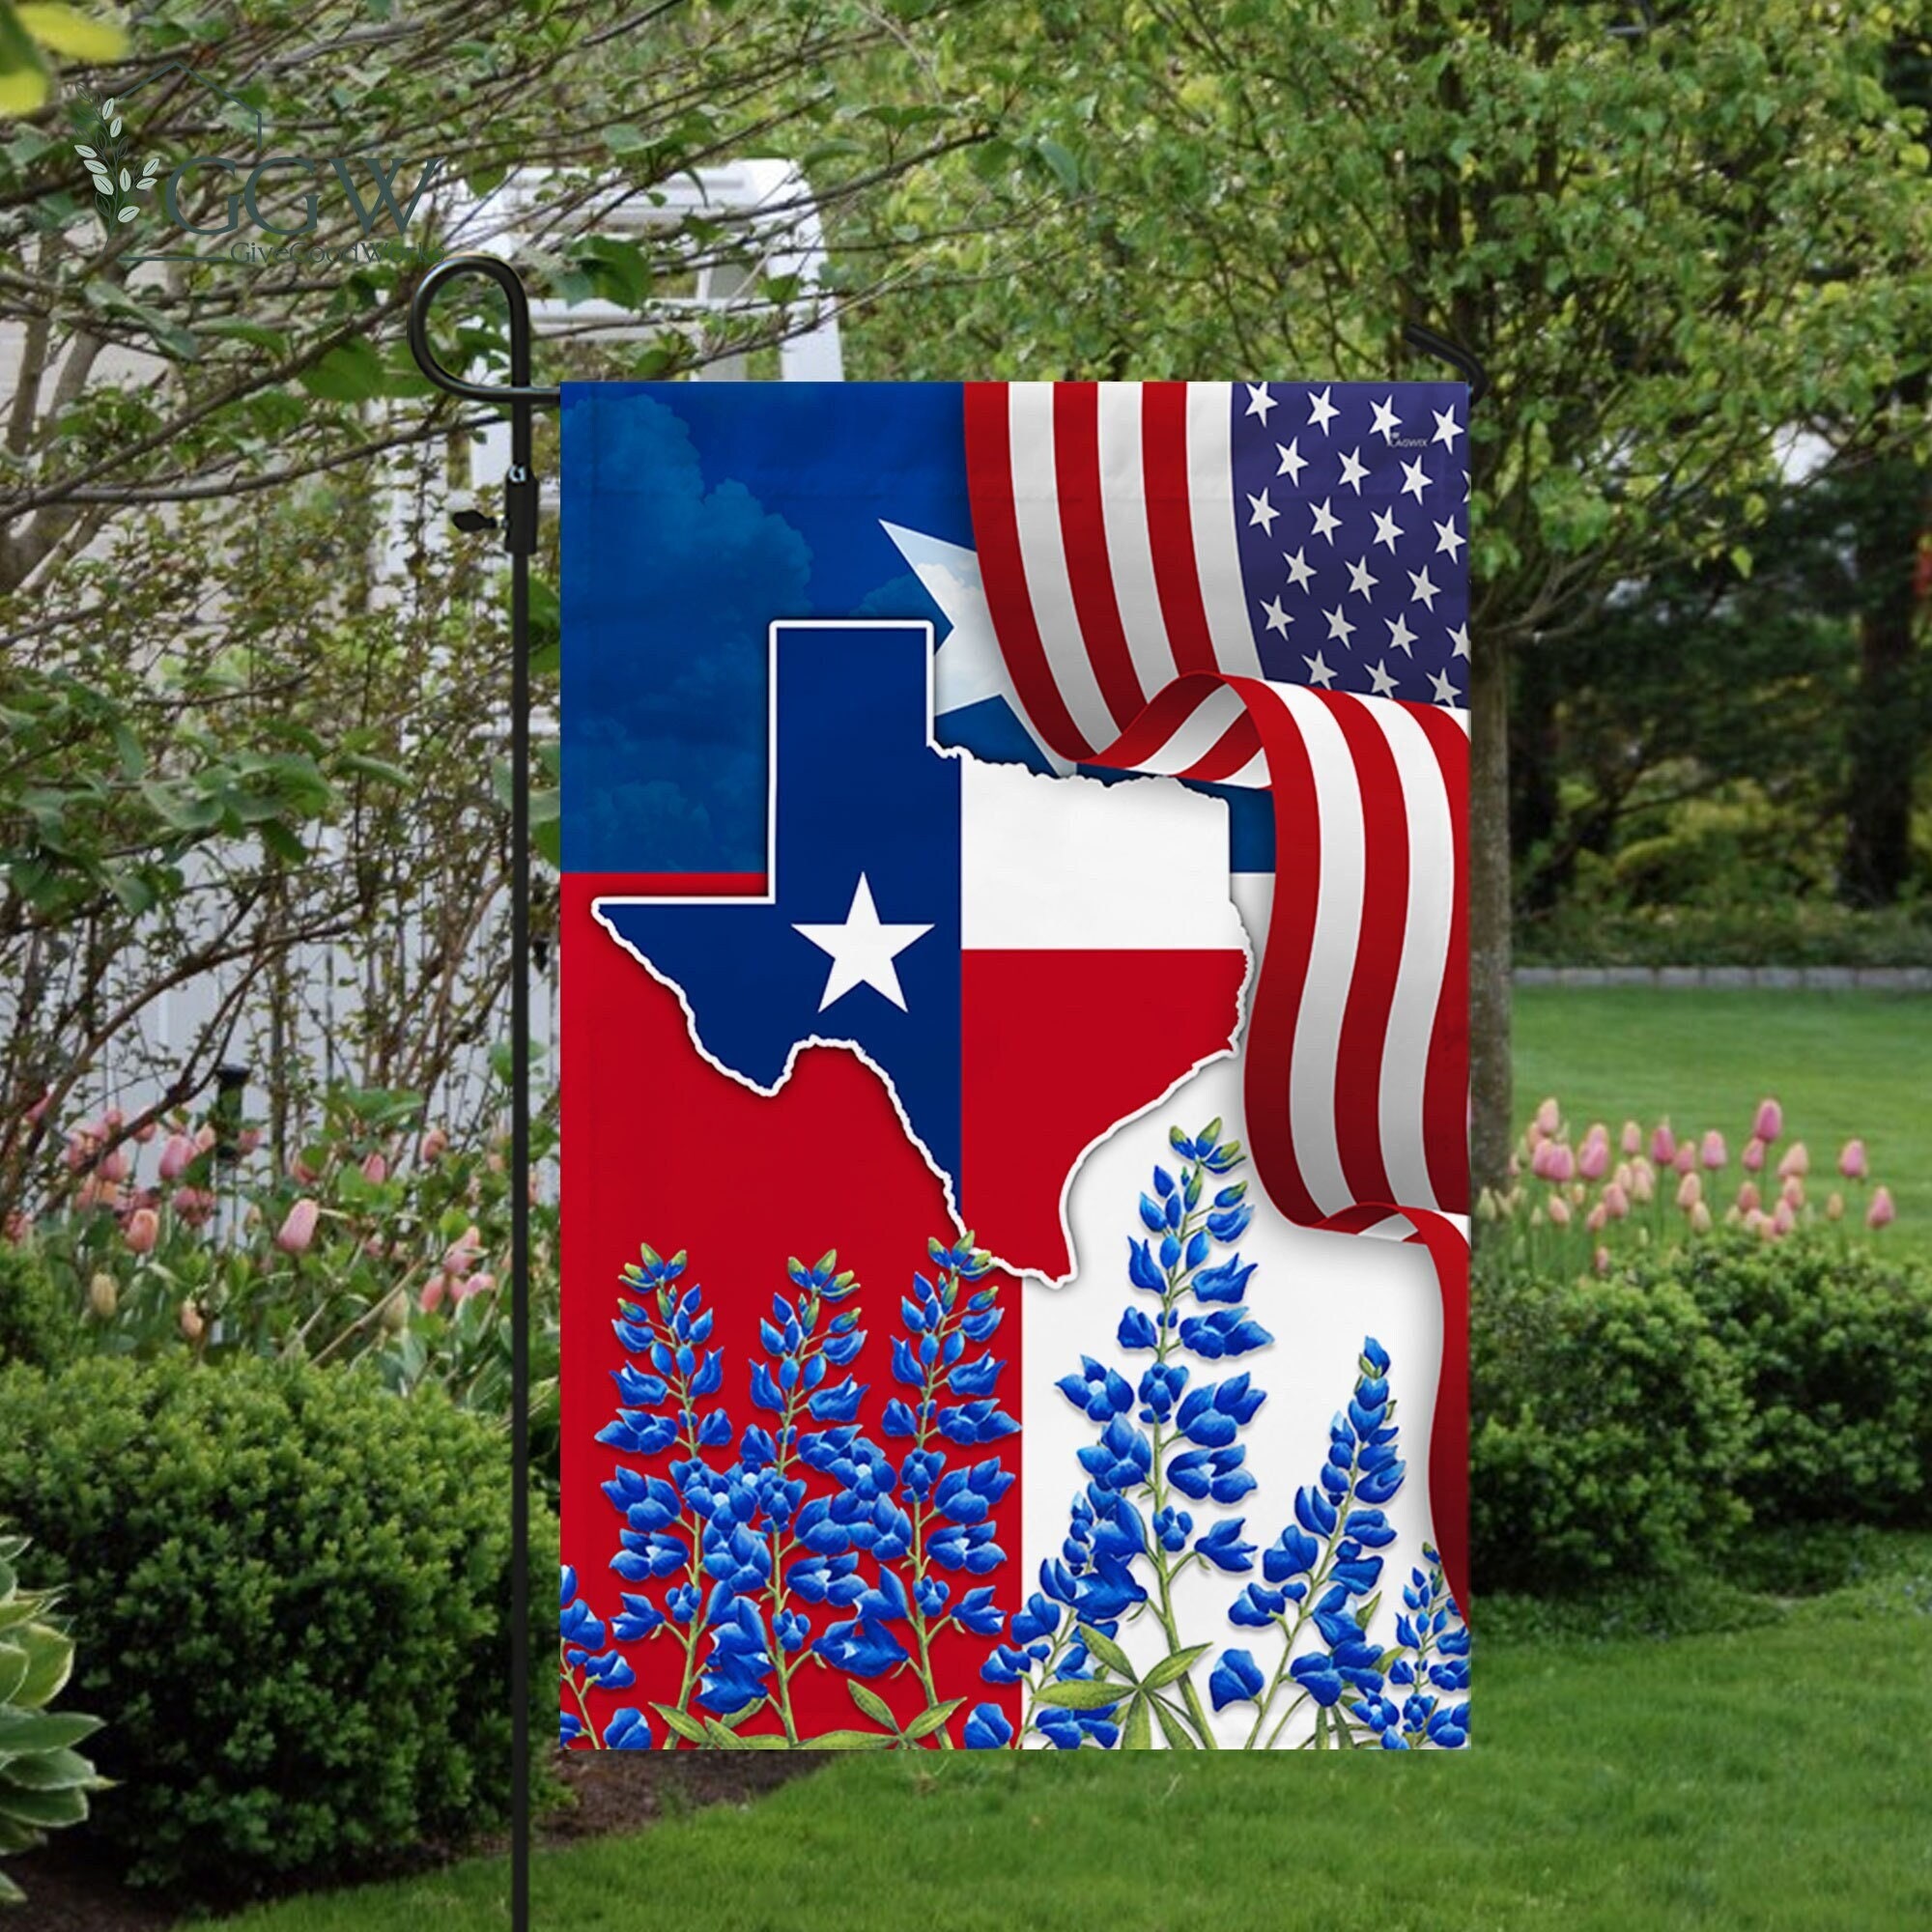  Texas Longhorns Baseball Garden Flag and Yard Banner